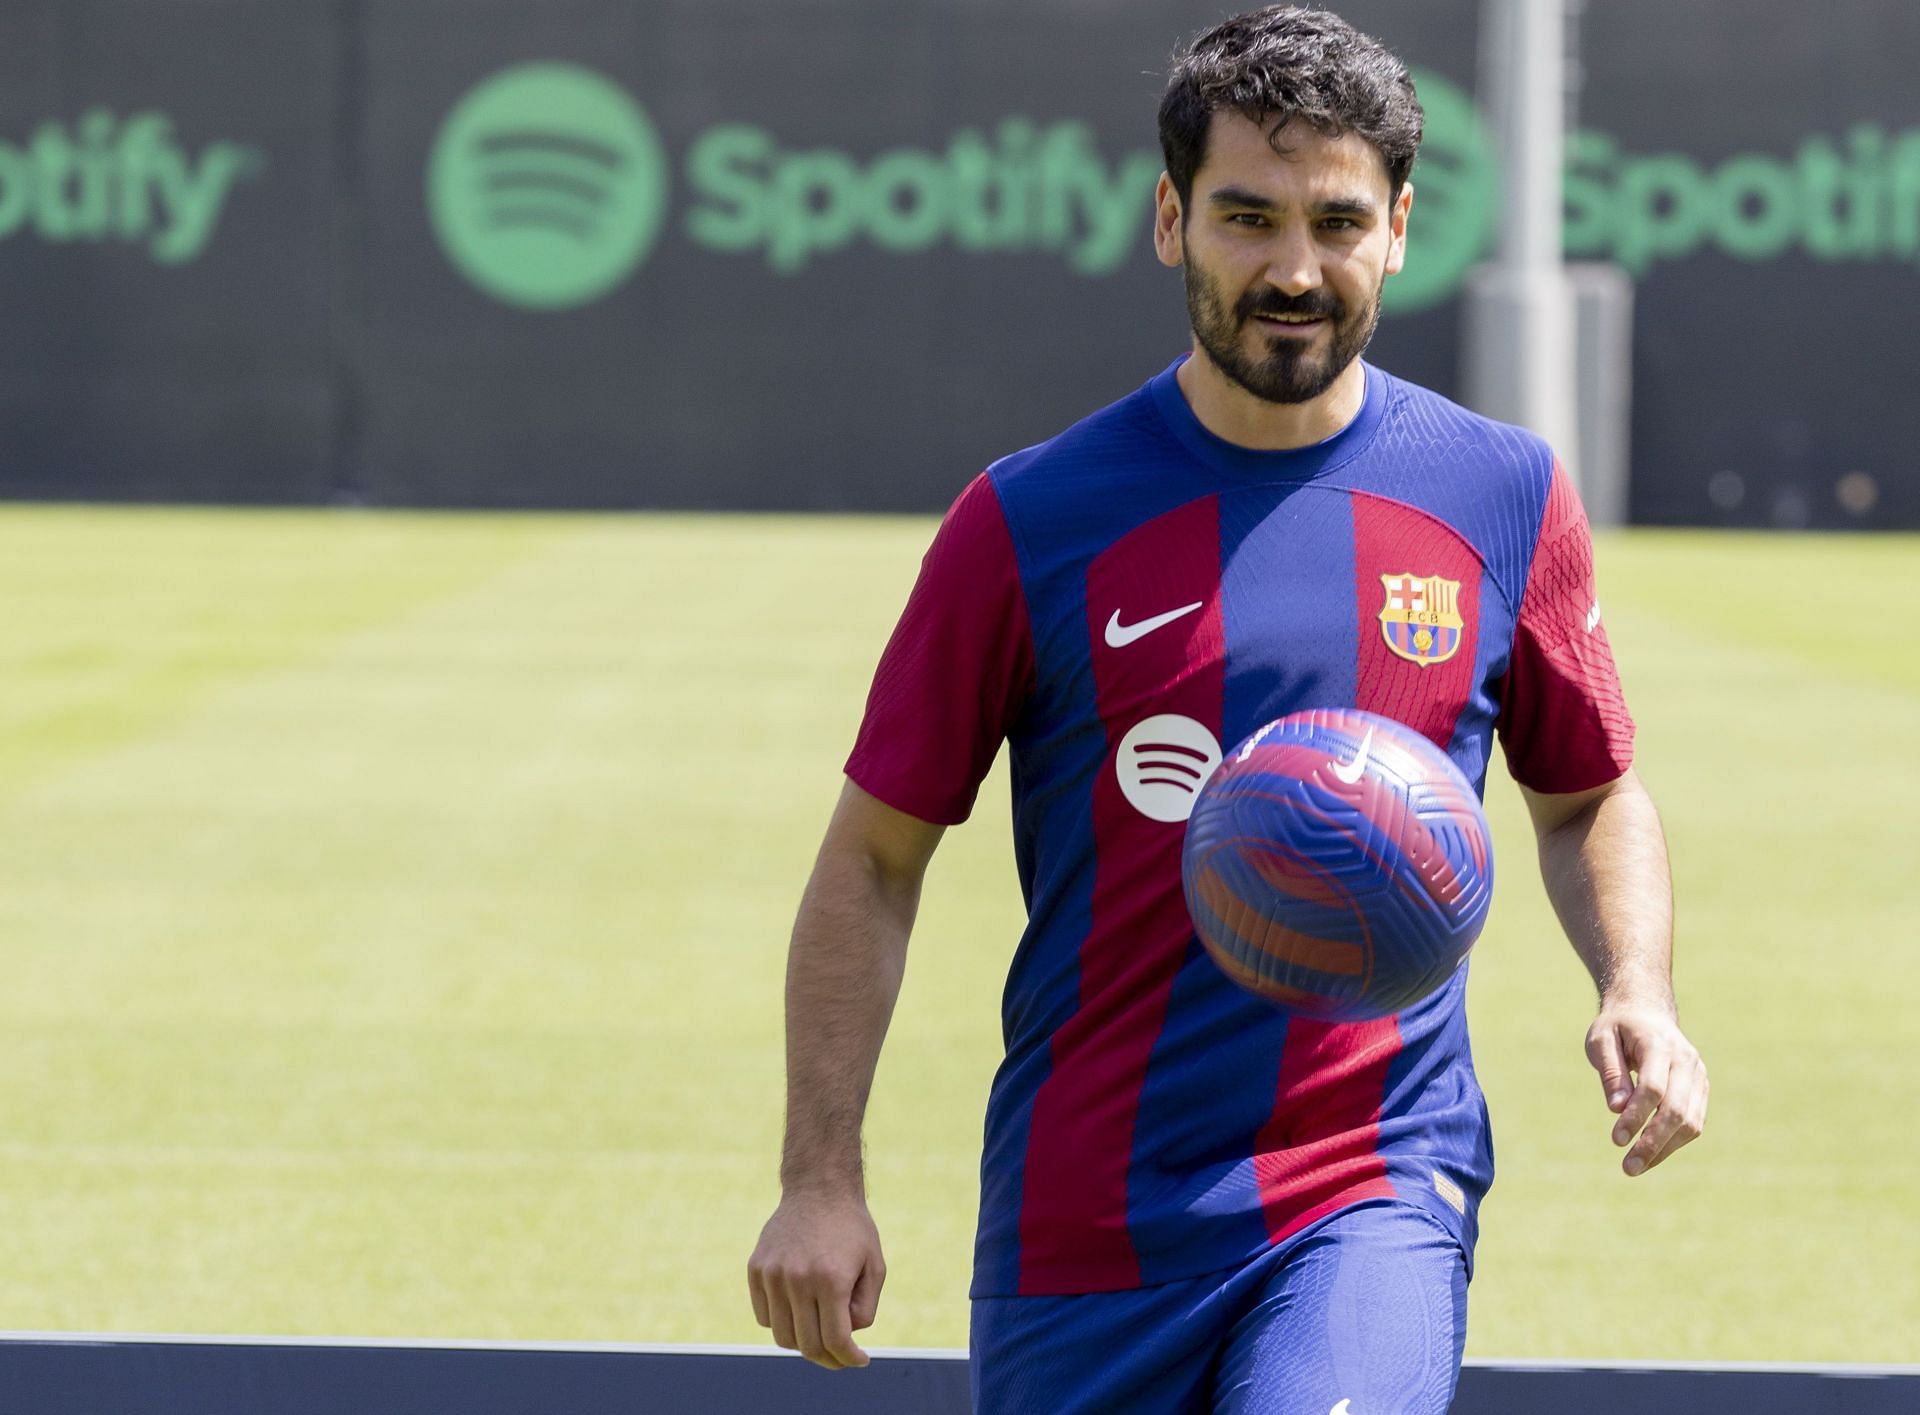 Ilkay Gundogan has arrived at the Camp Nou this summer.